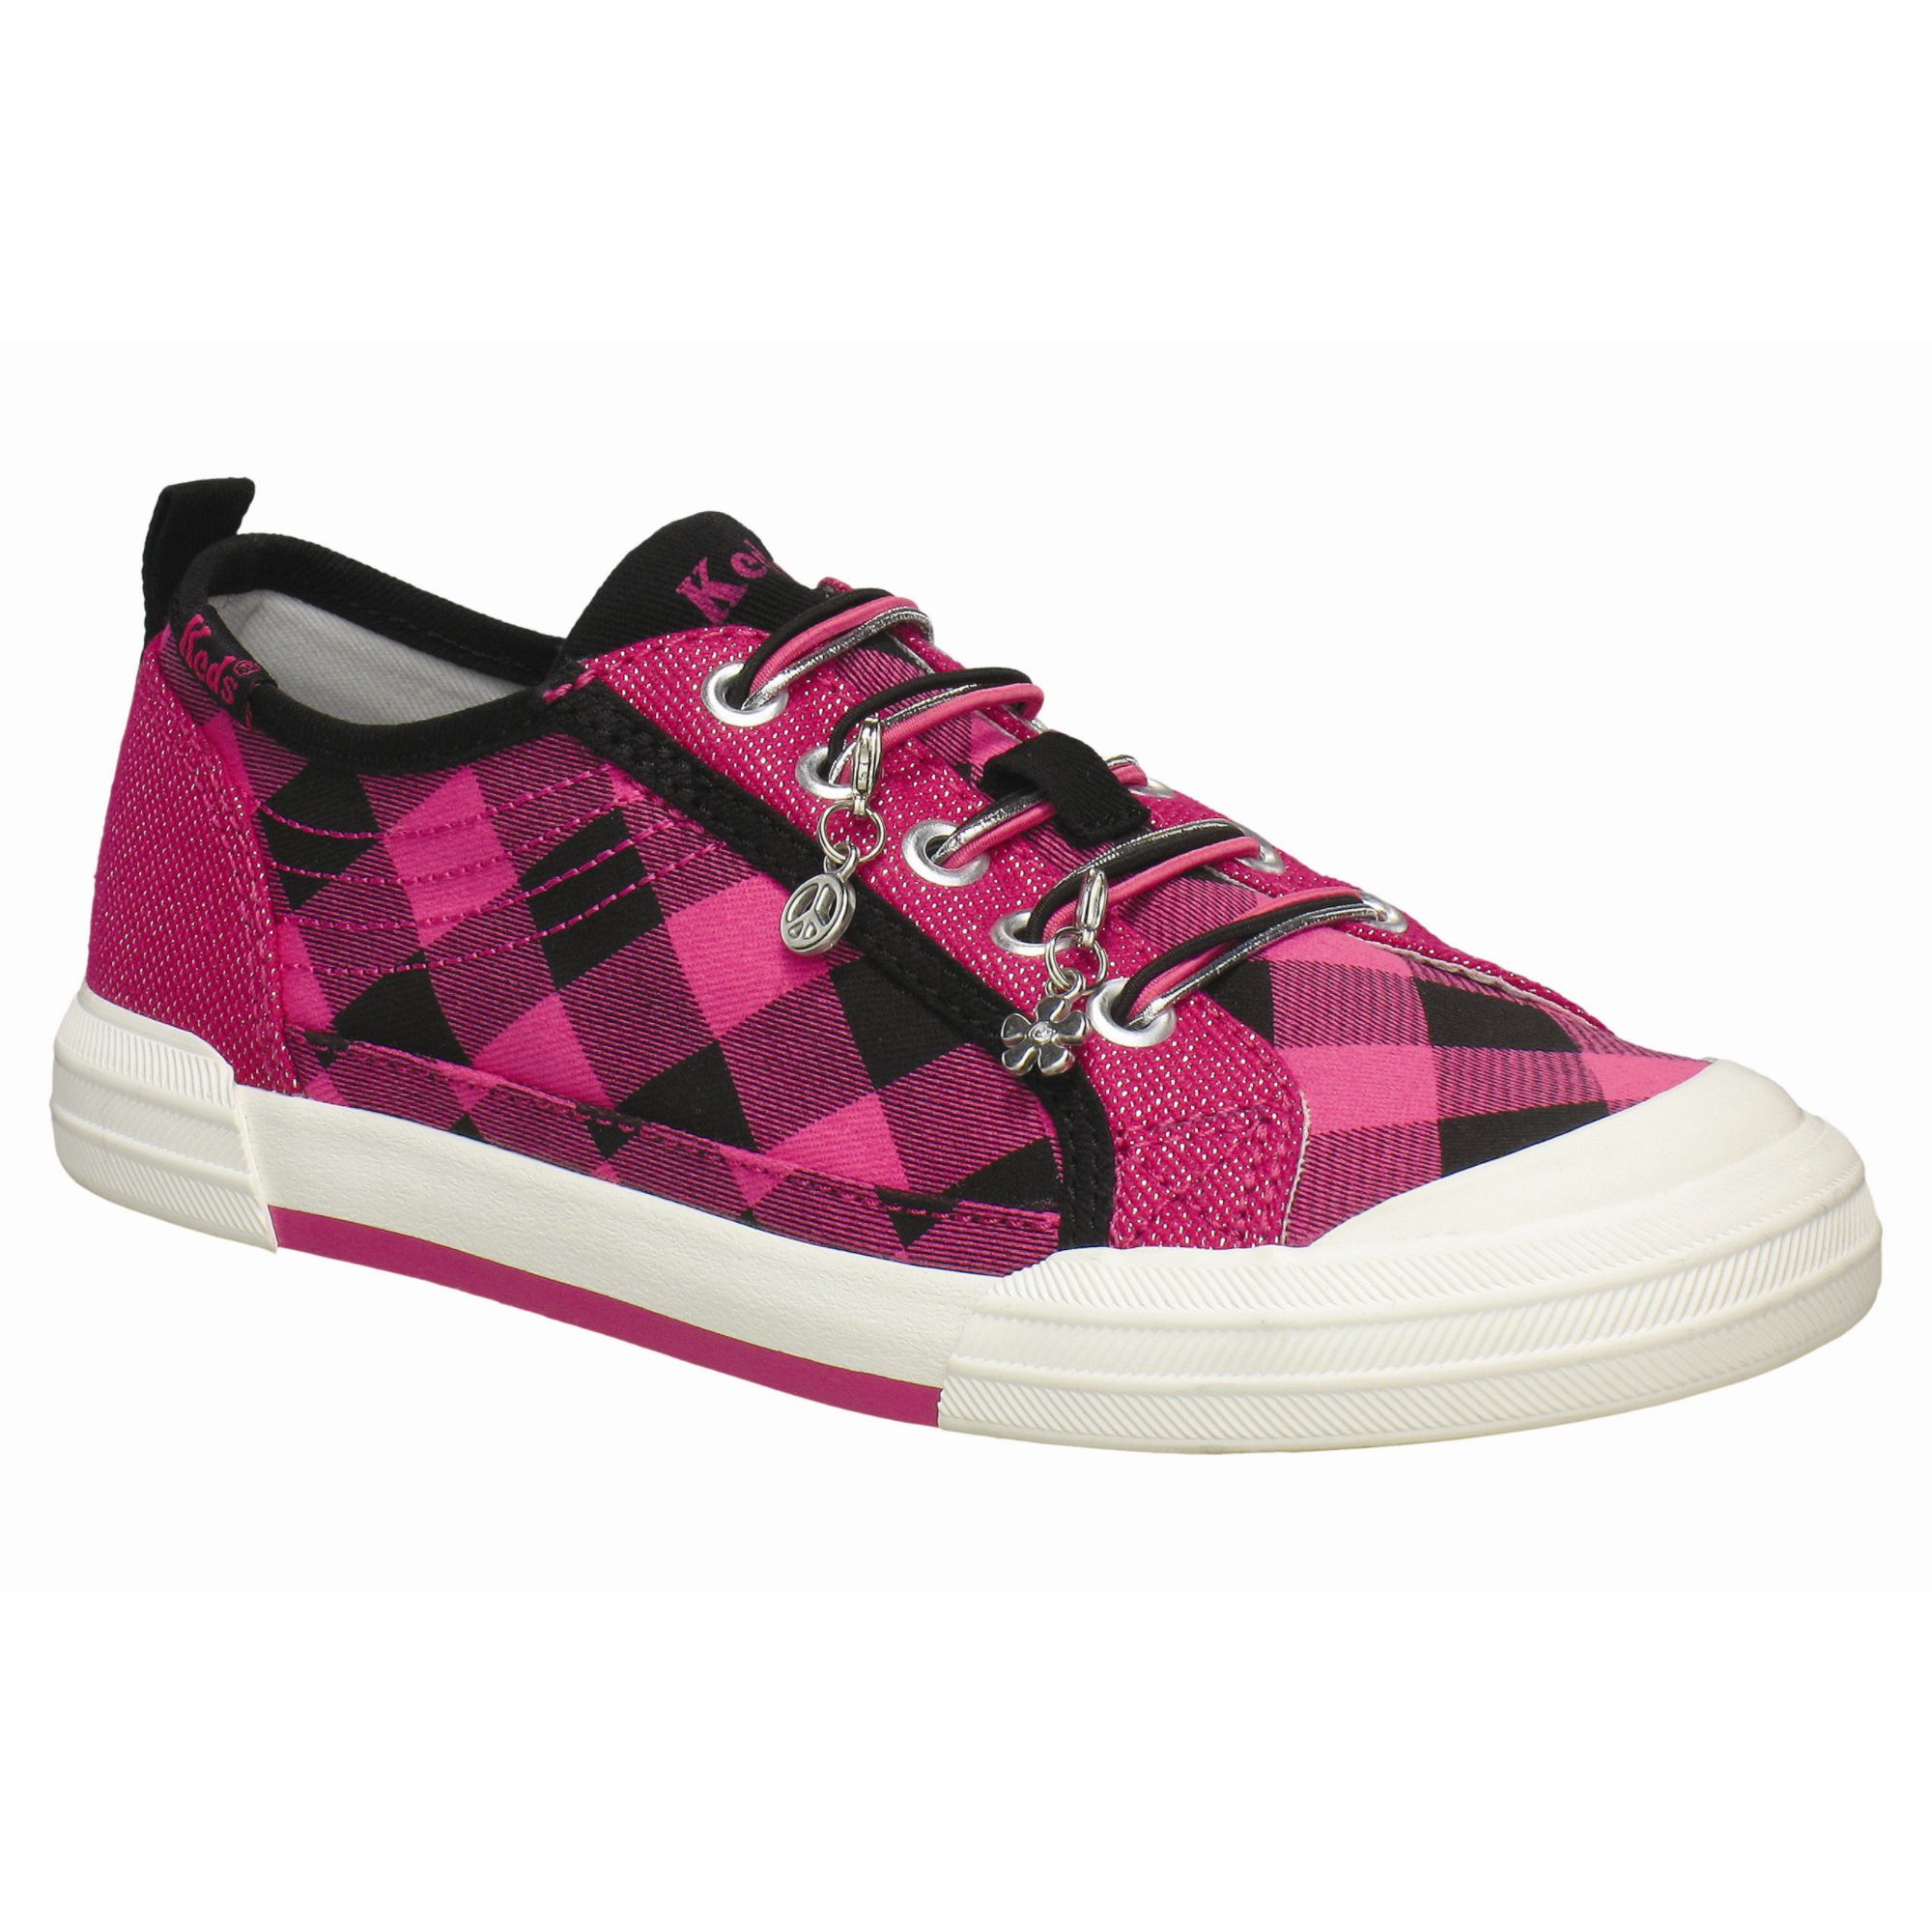 Keds Girl's Athletic Shoe Carolee - Pink